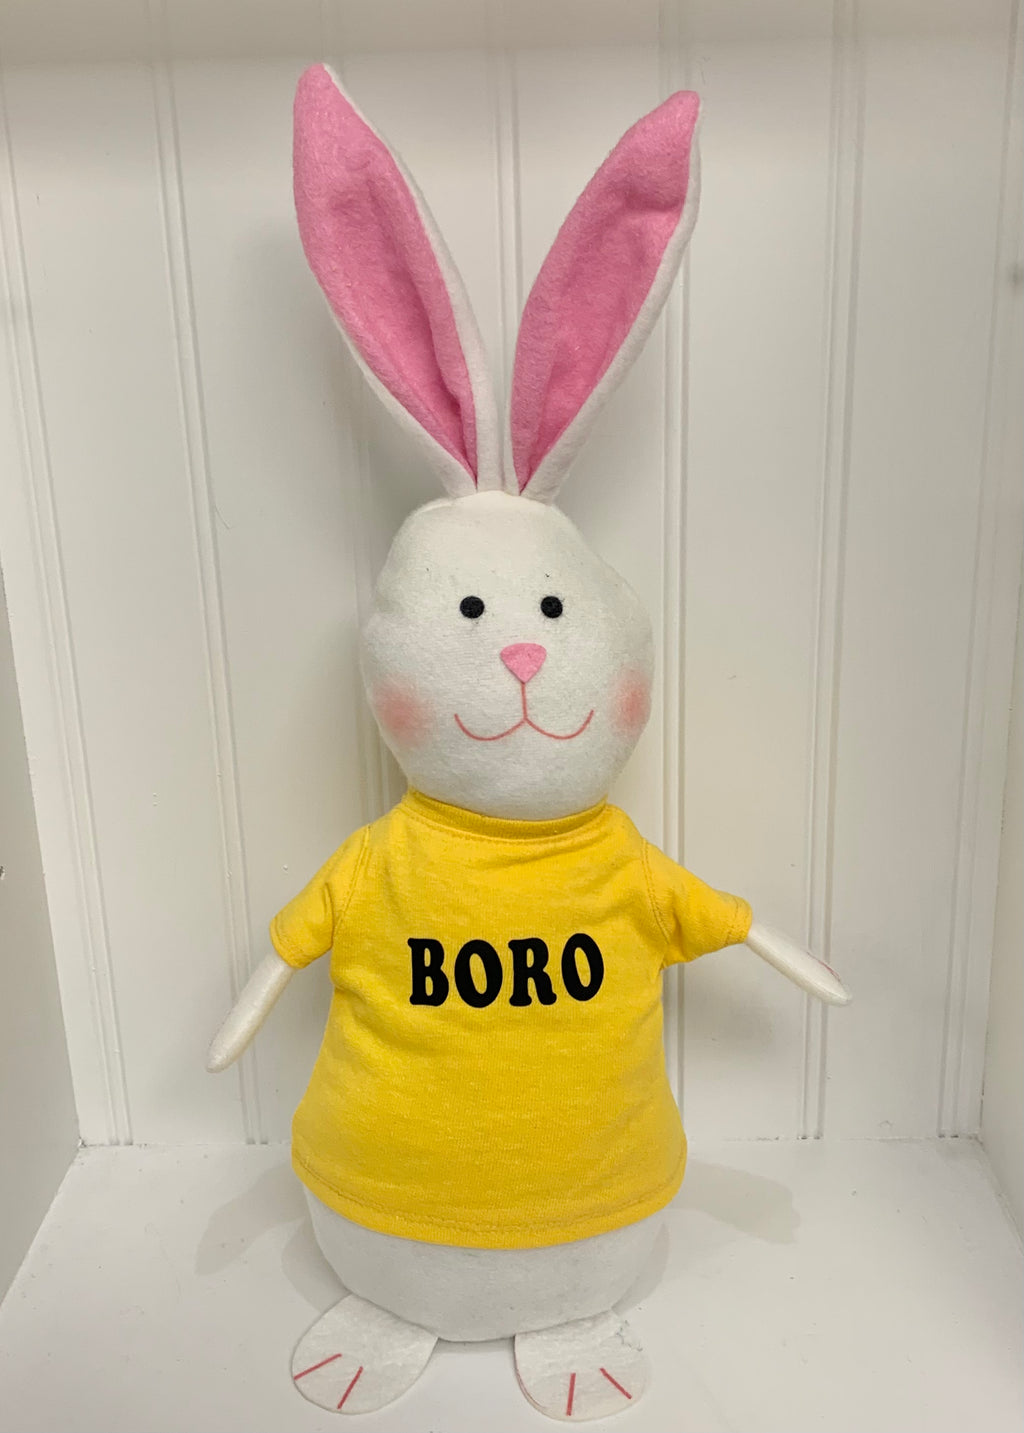 Boro Bunny